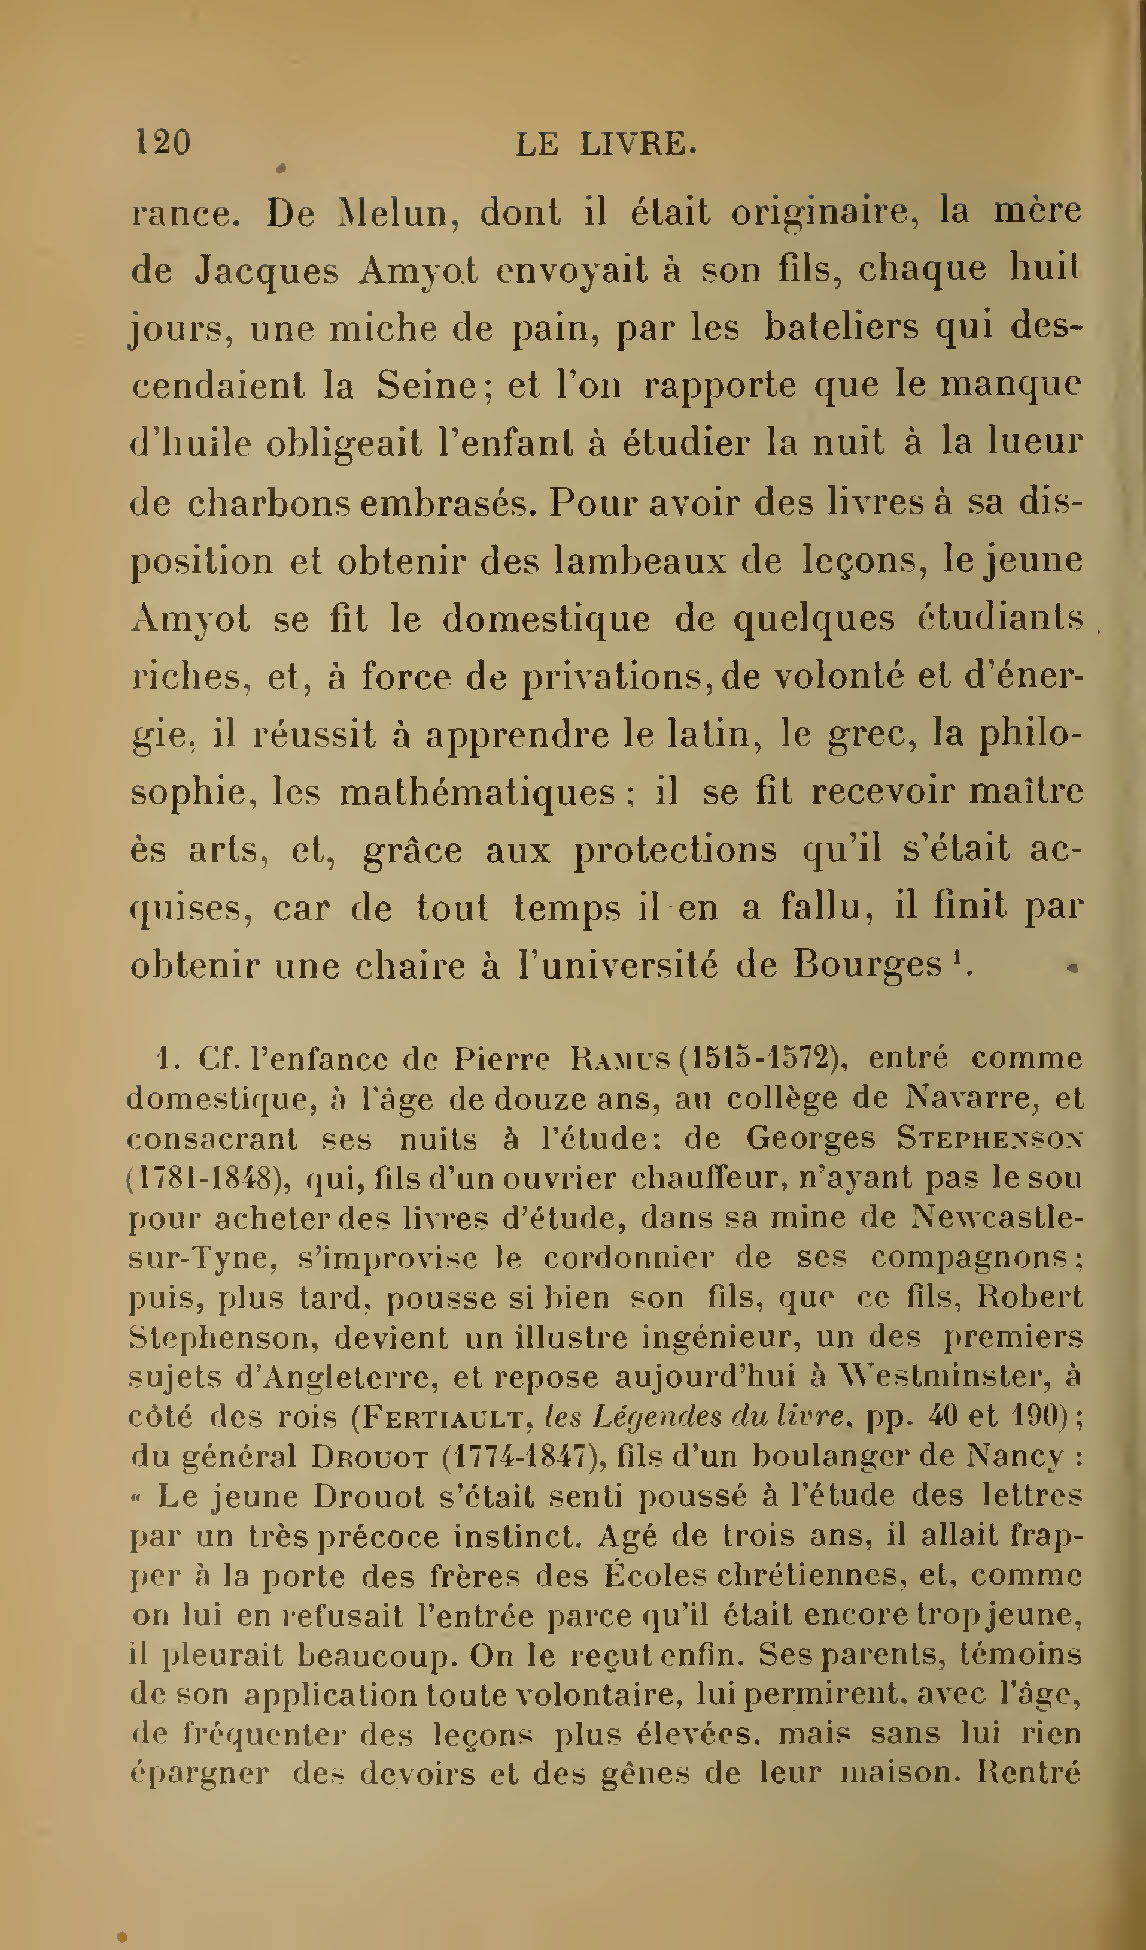 Albert Cim, Le Livre, t. I, p. 120.